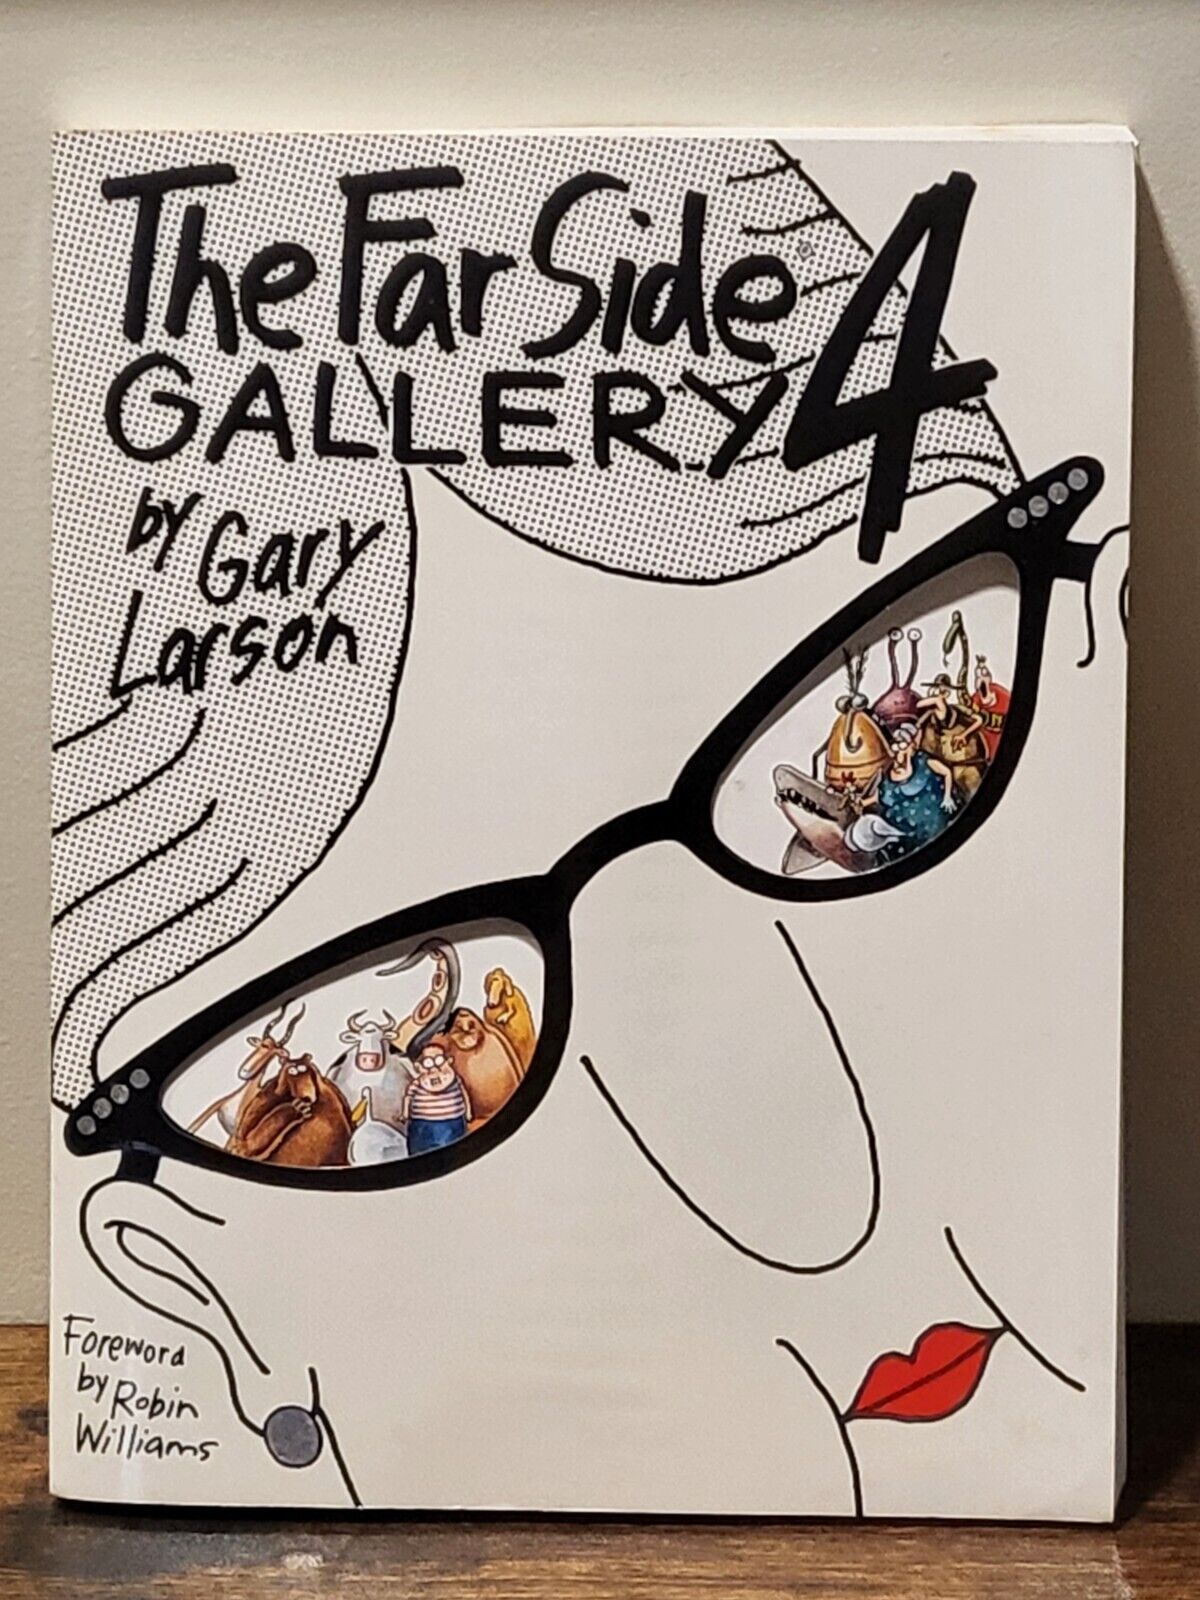 The Far Side Gallery 4 Vintage (1993) by Gary Larson Forward by Robin Williams